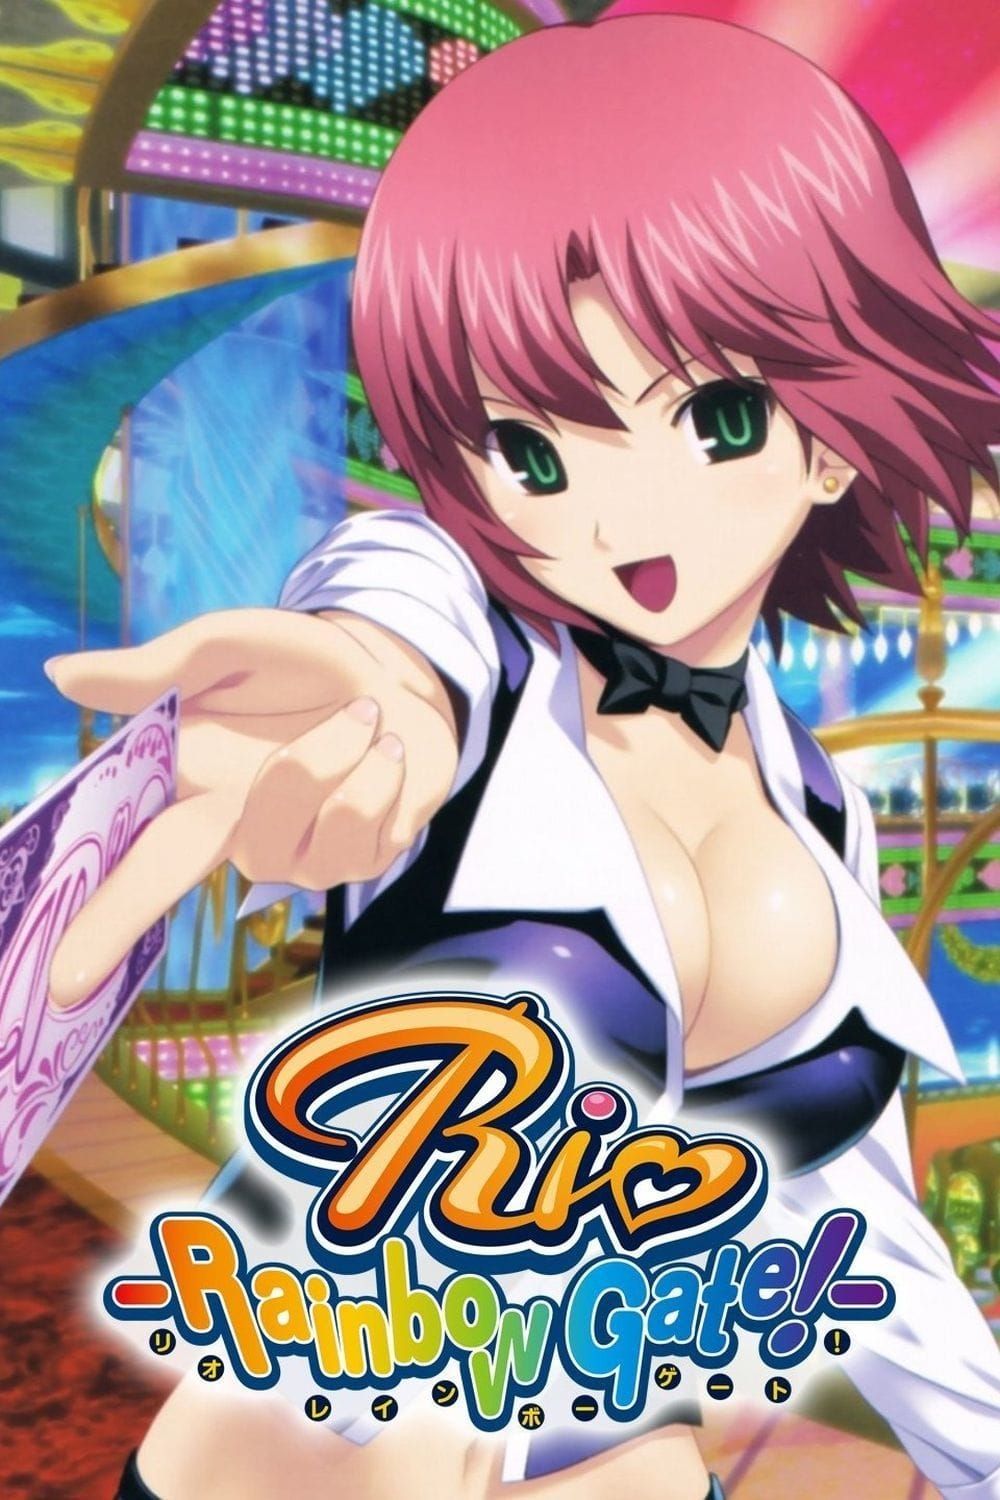 [The Best Manga] Rio – Rainbow Gate! (TV) (Sub)